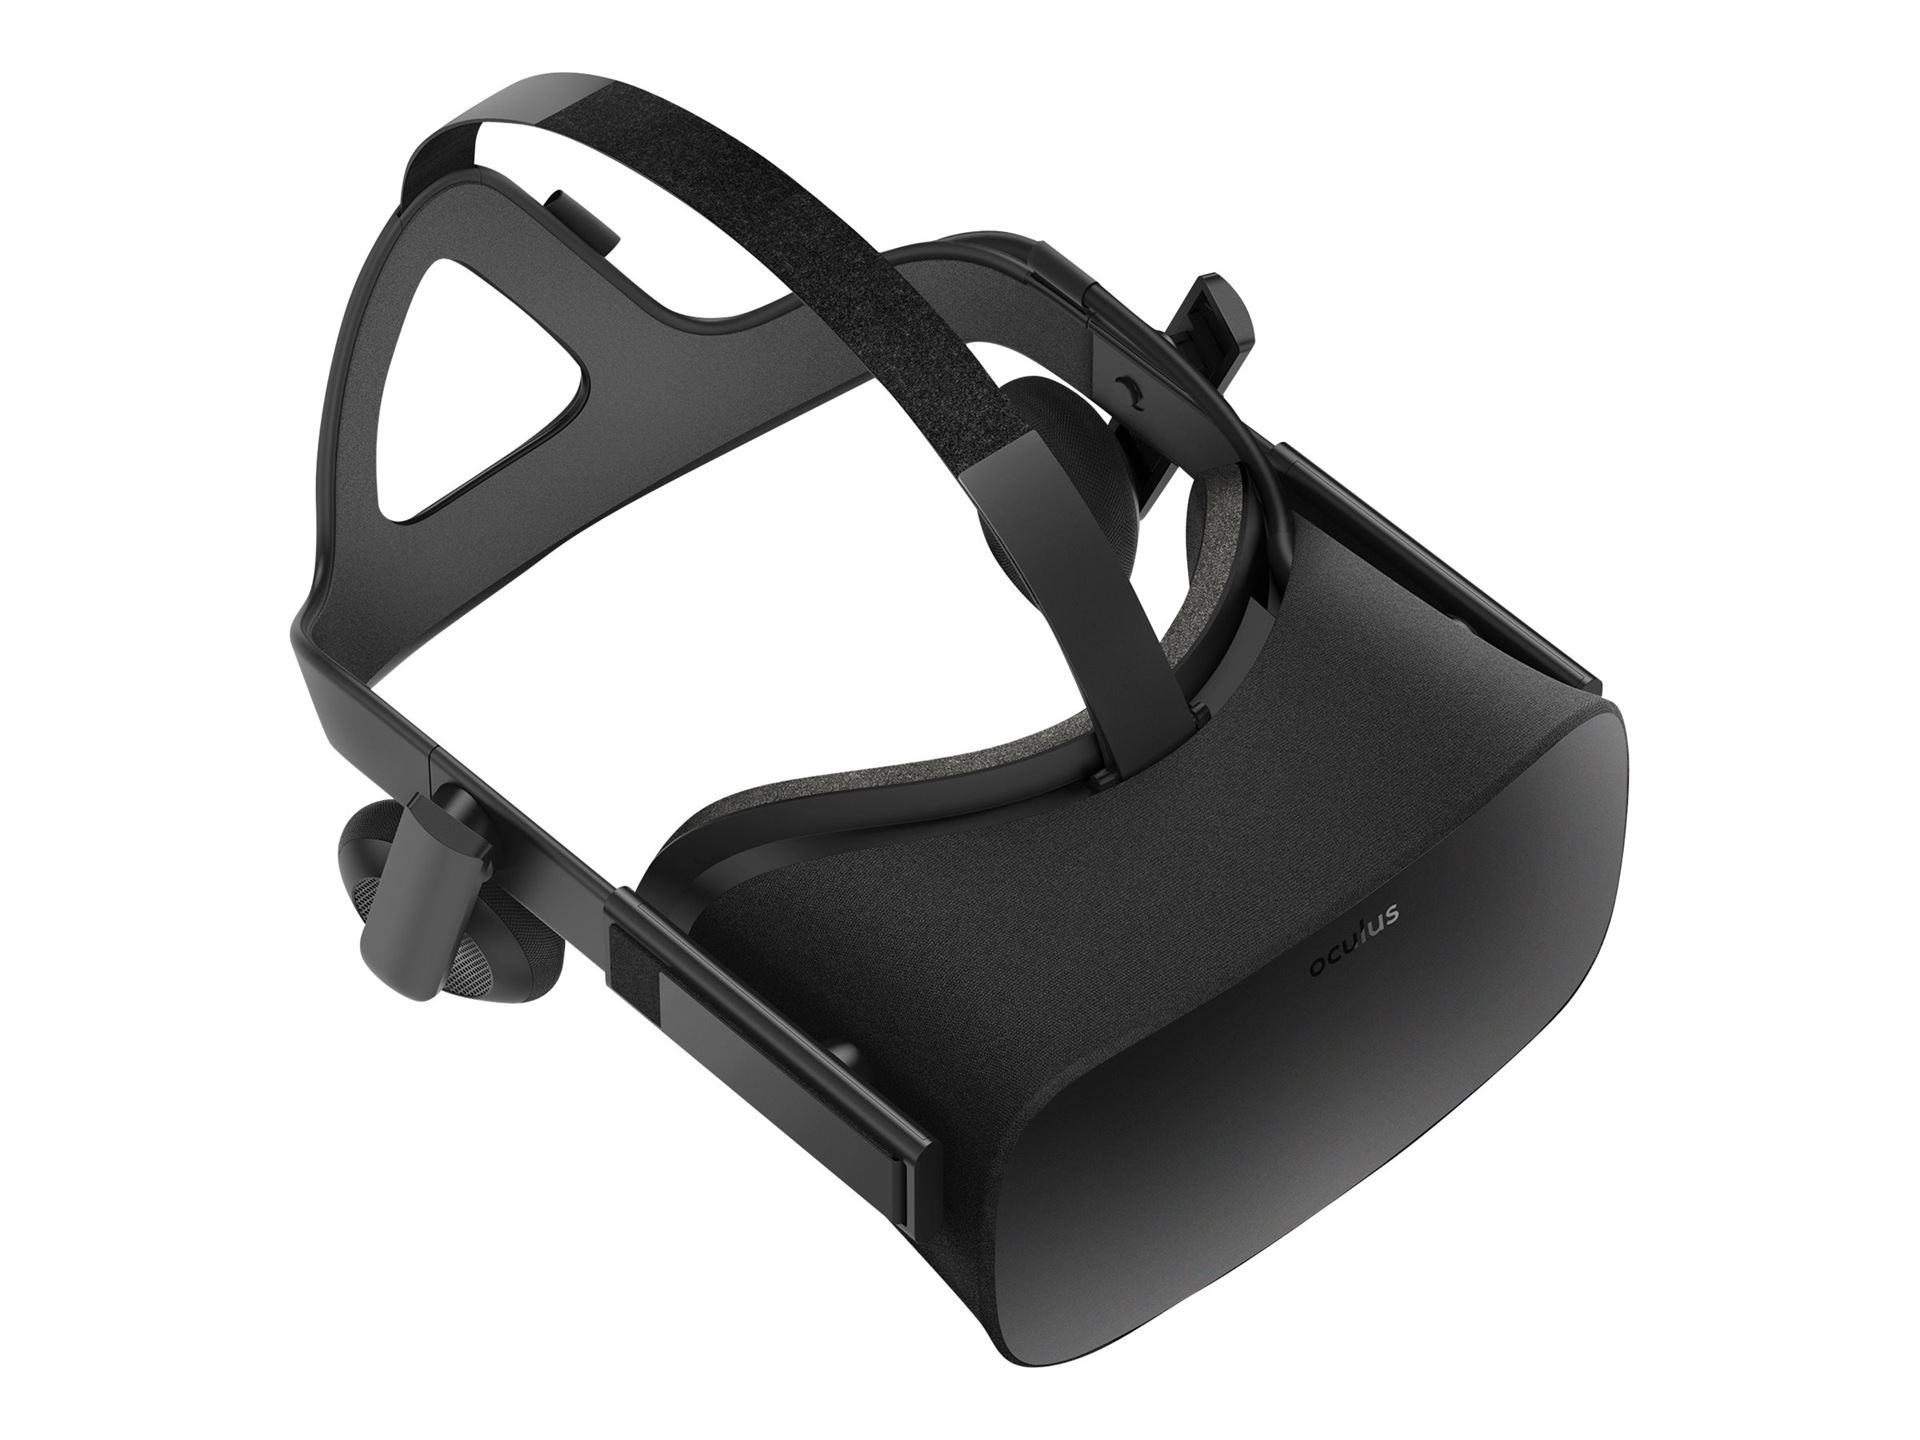 Oculus Rift - 3D virtual reality headset